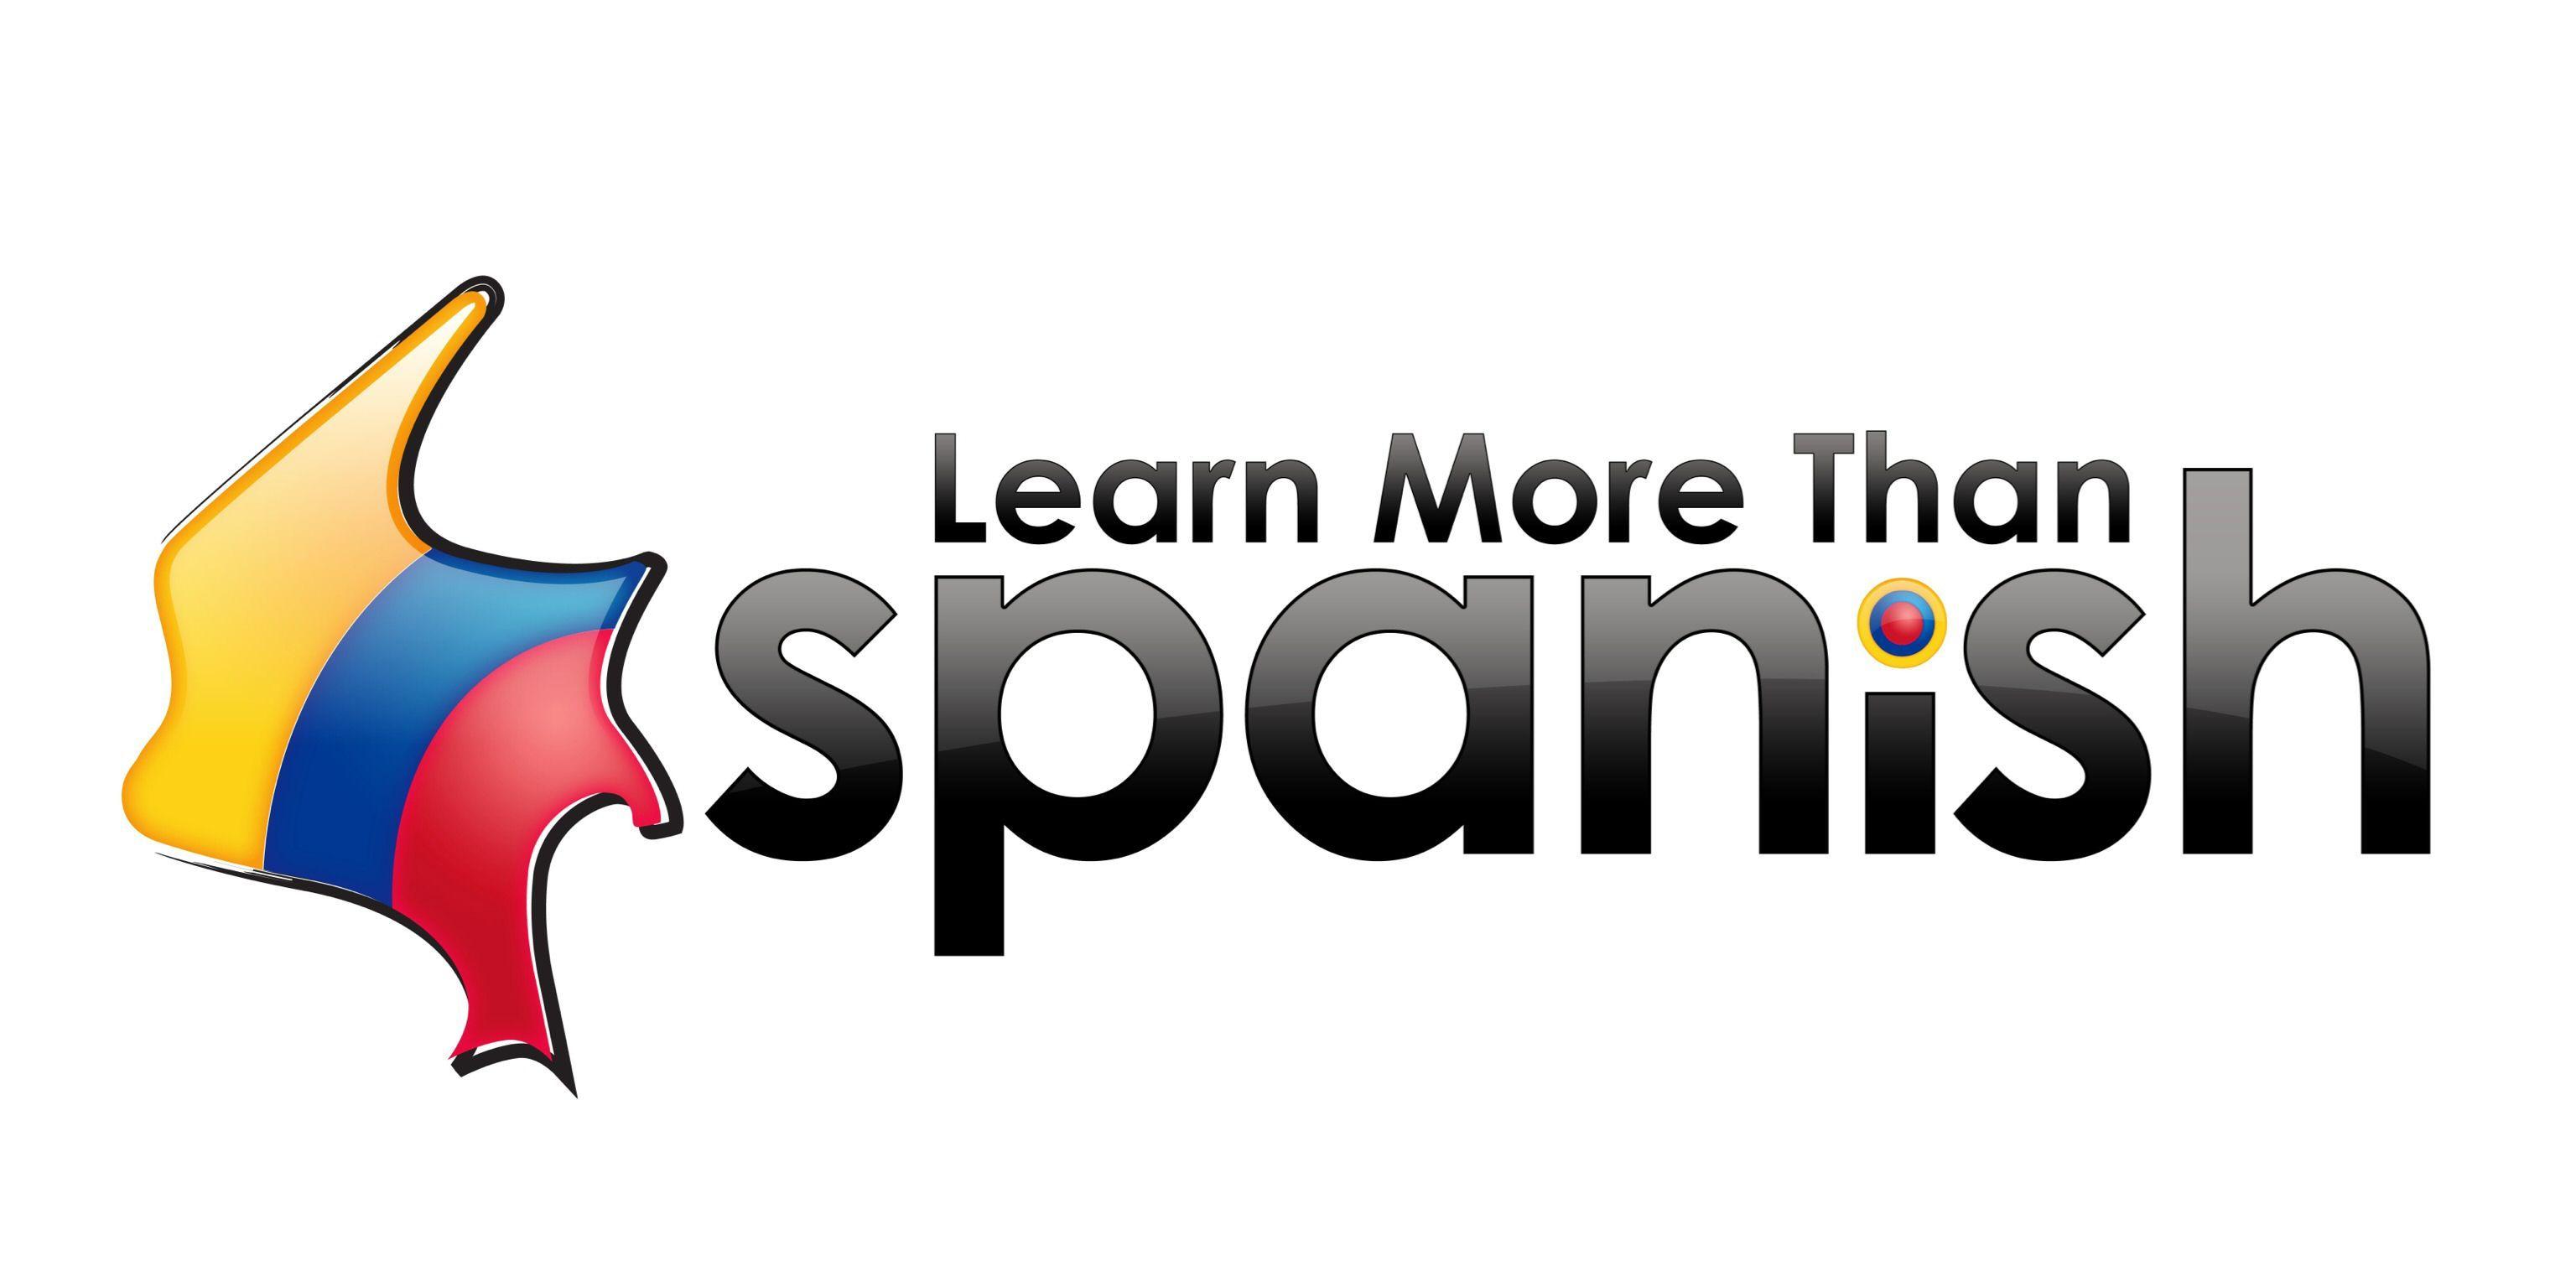 Spanish Logo - Learn More Than Spanish Downloads